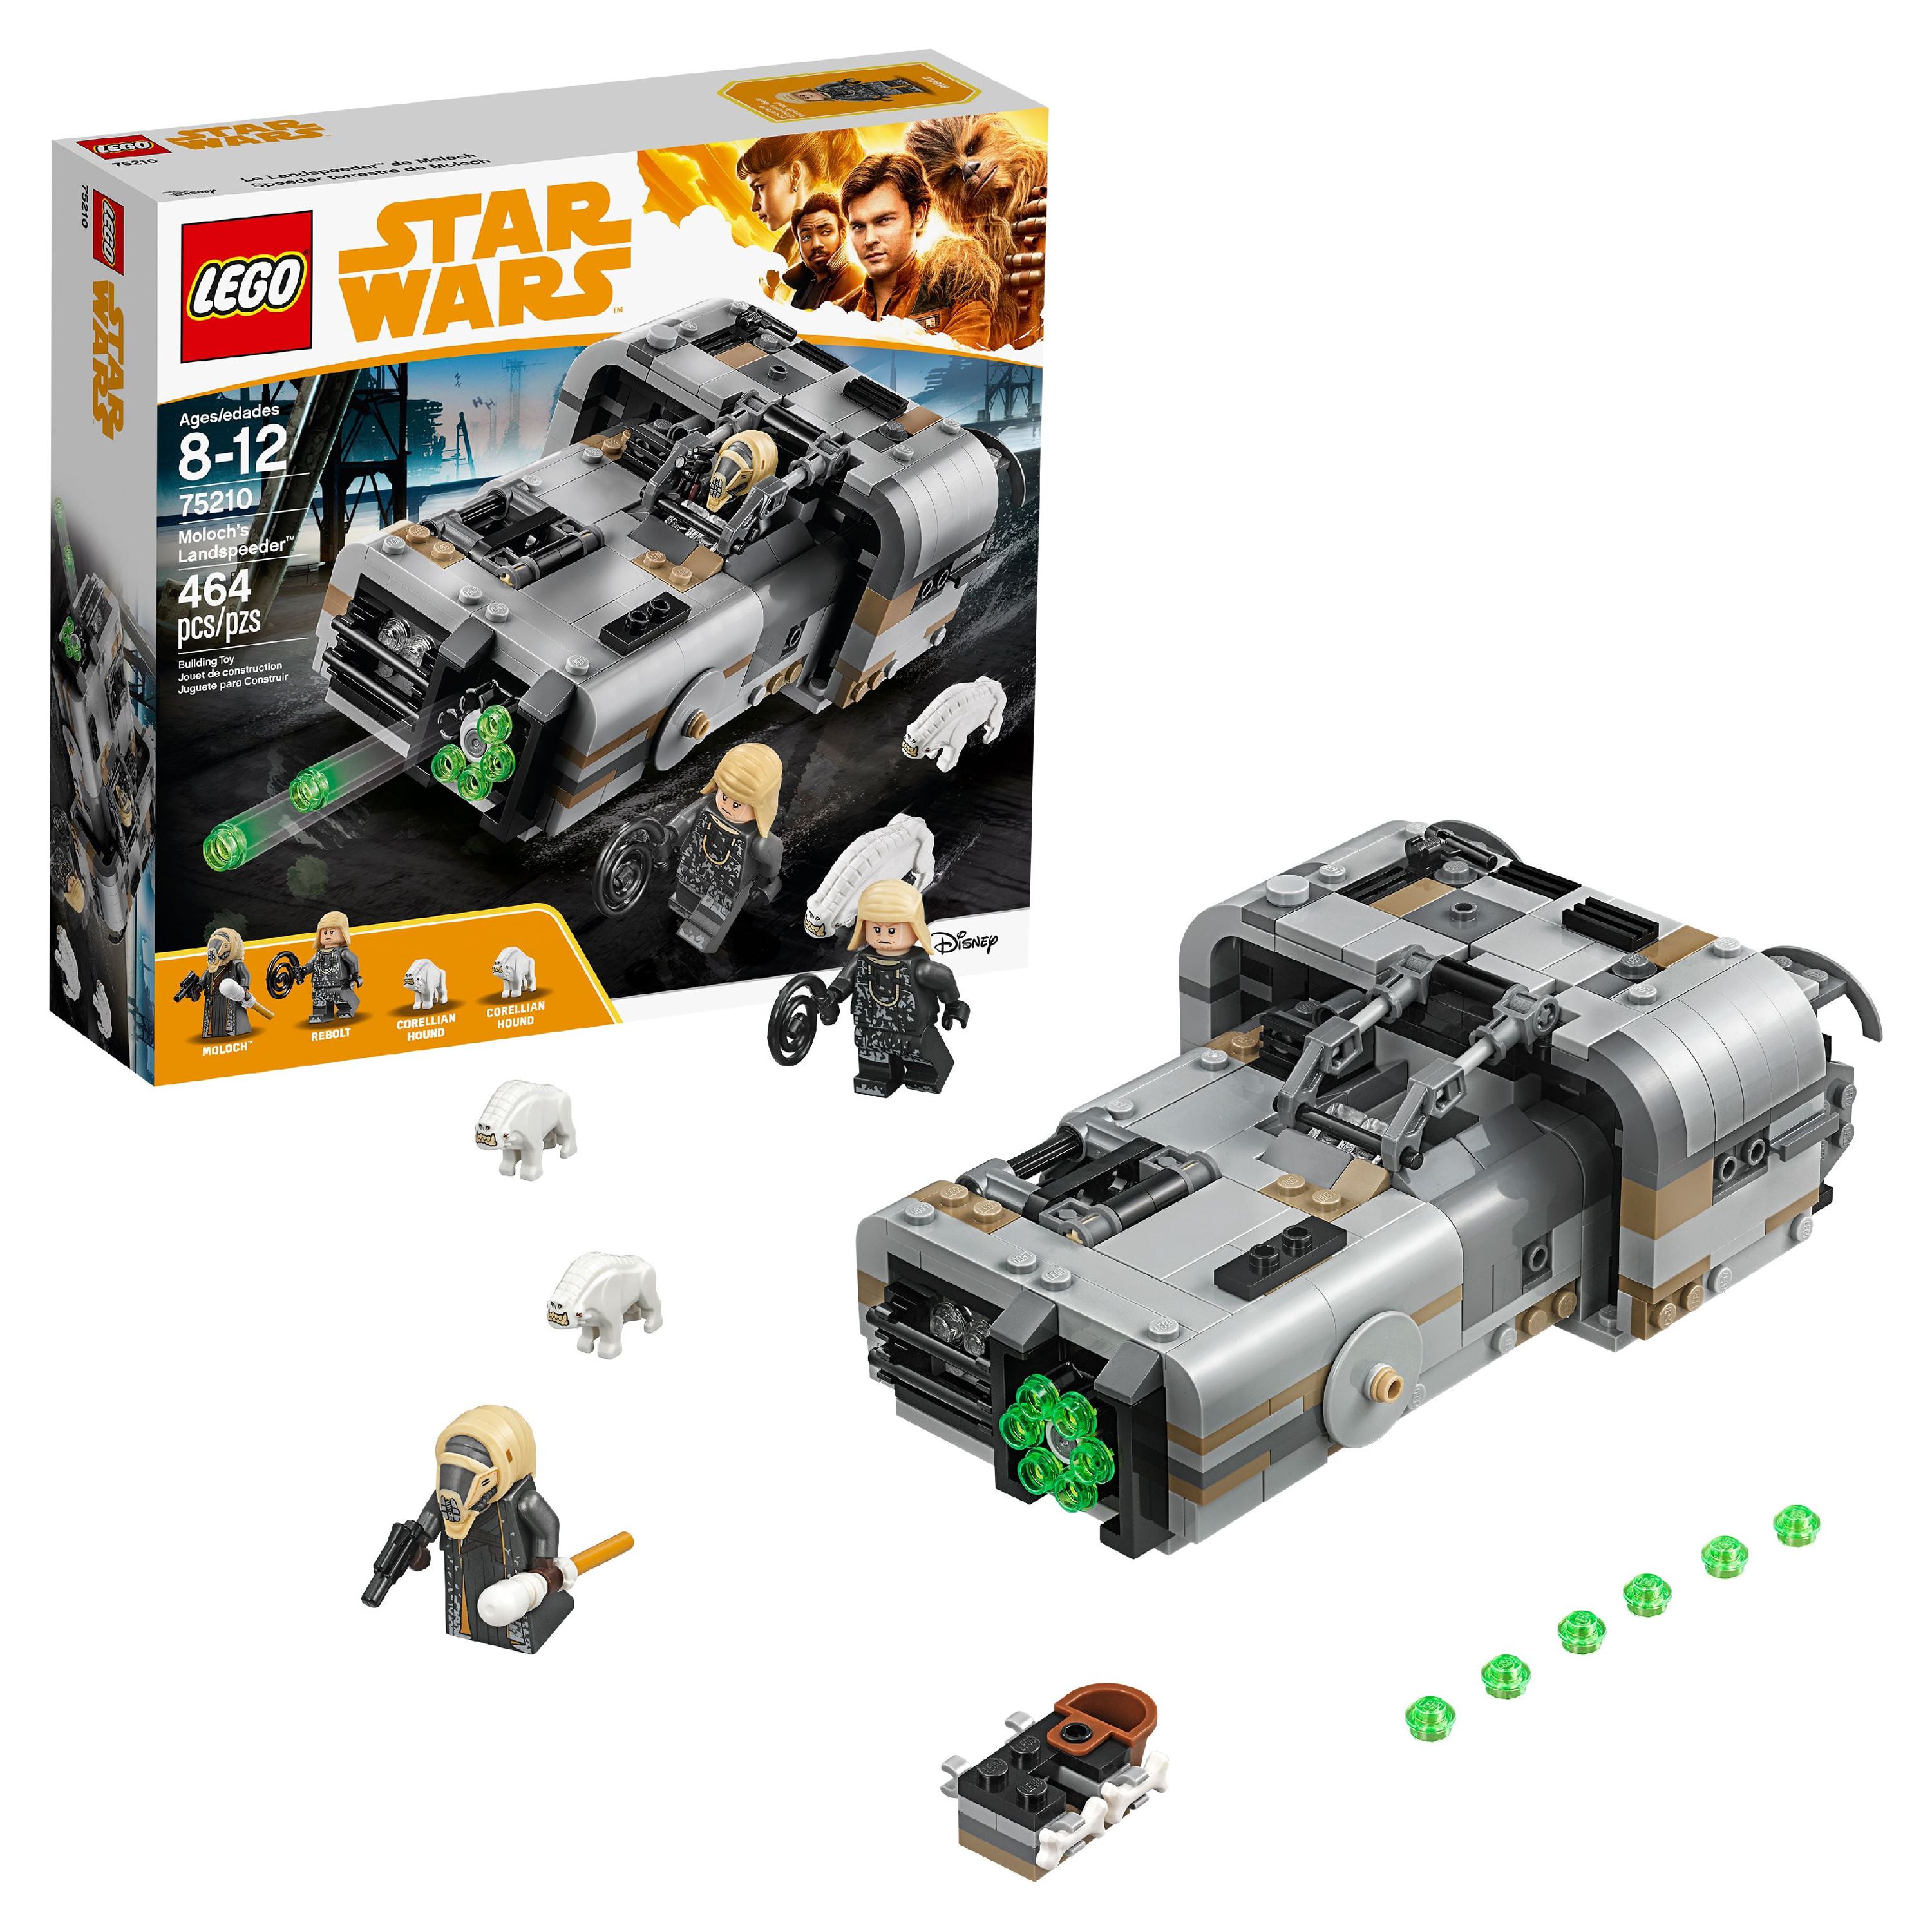 LEGO Star Wars TM Moloch's Landspeeder 75210 Building Set - image 1 of 6